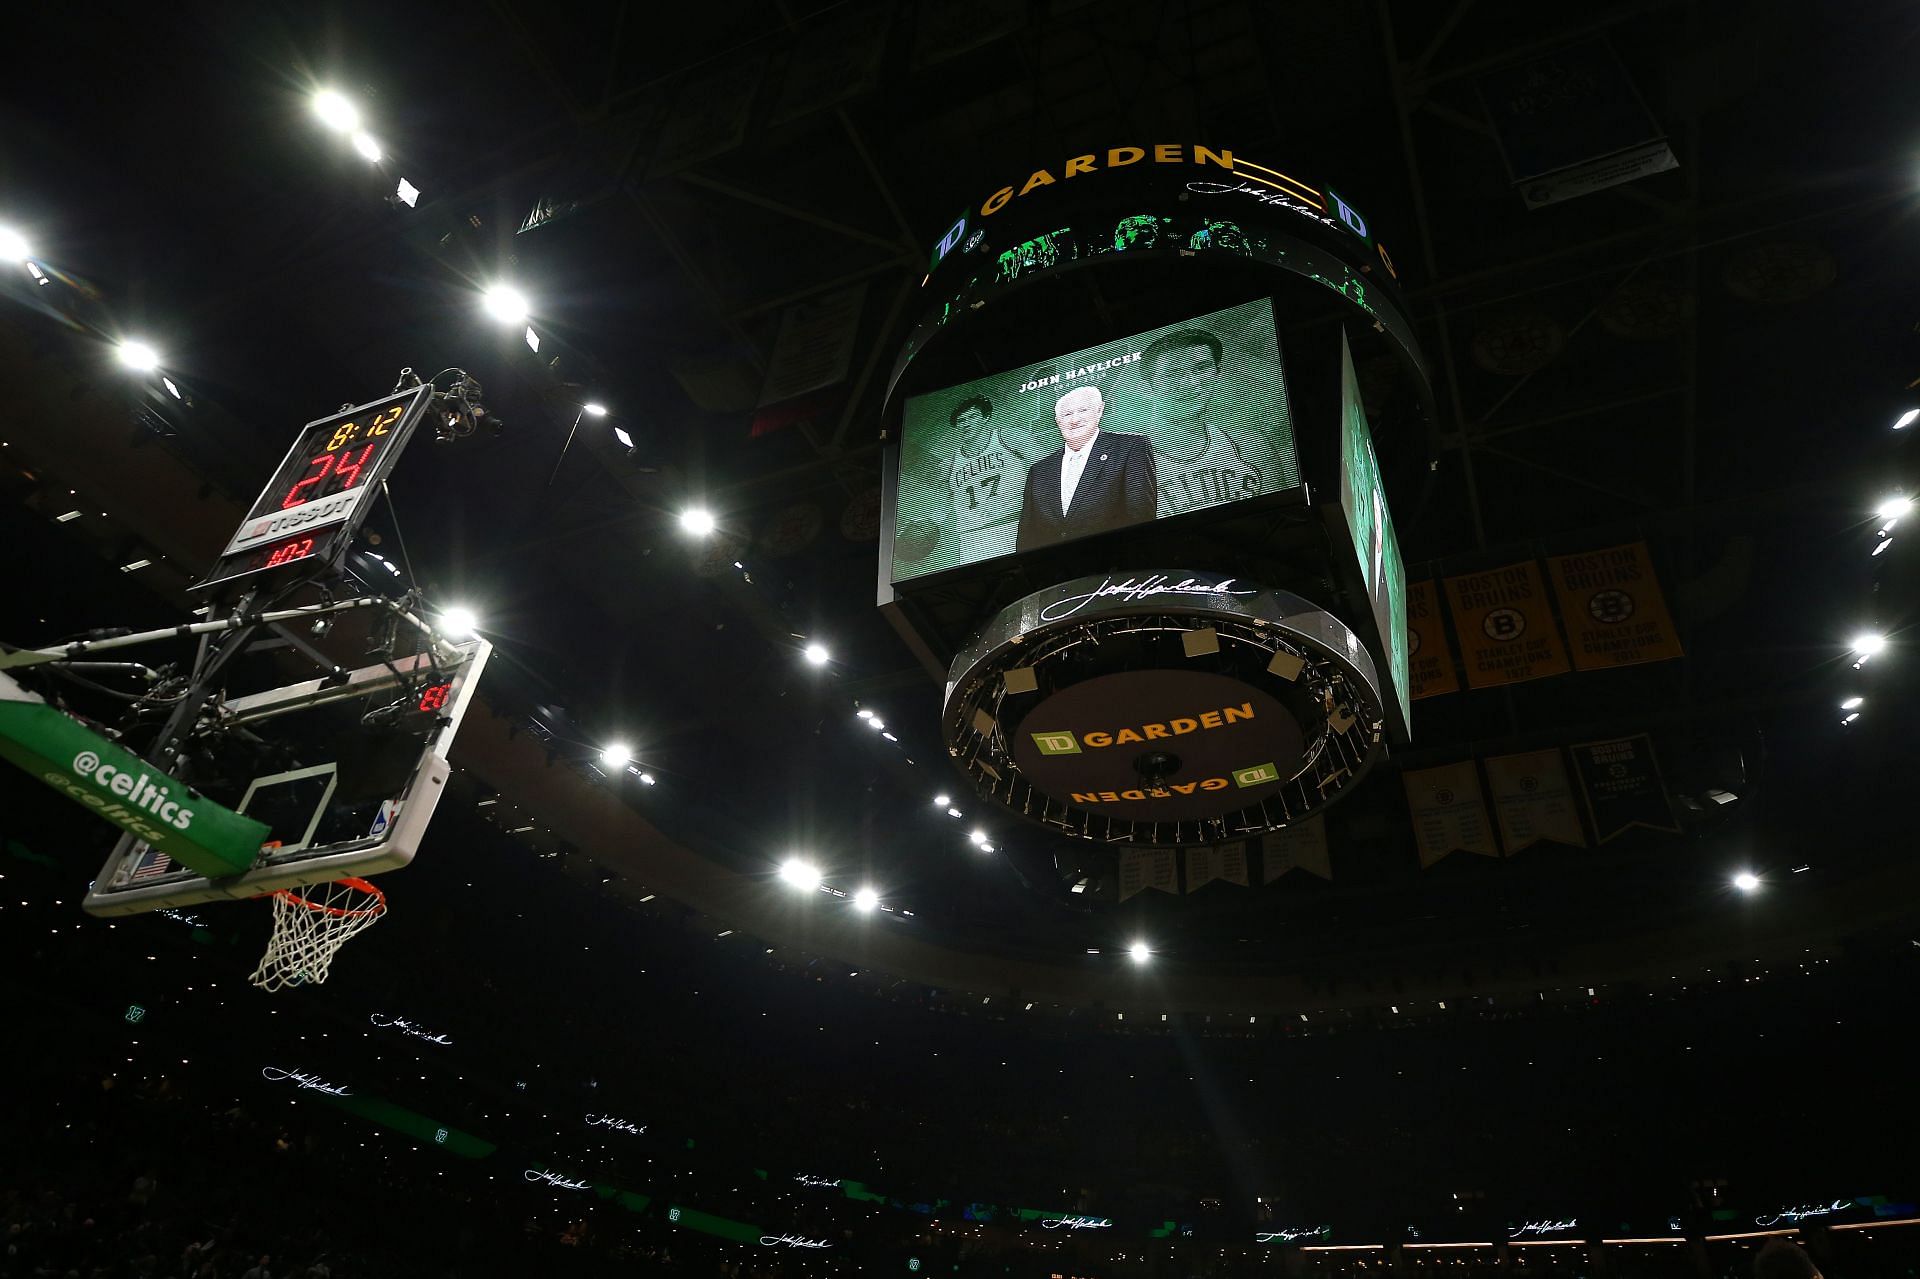 Hondo, an NBA legend, is a big part of the Boston Celtics.